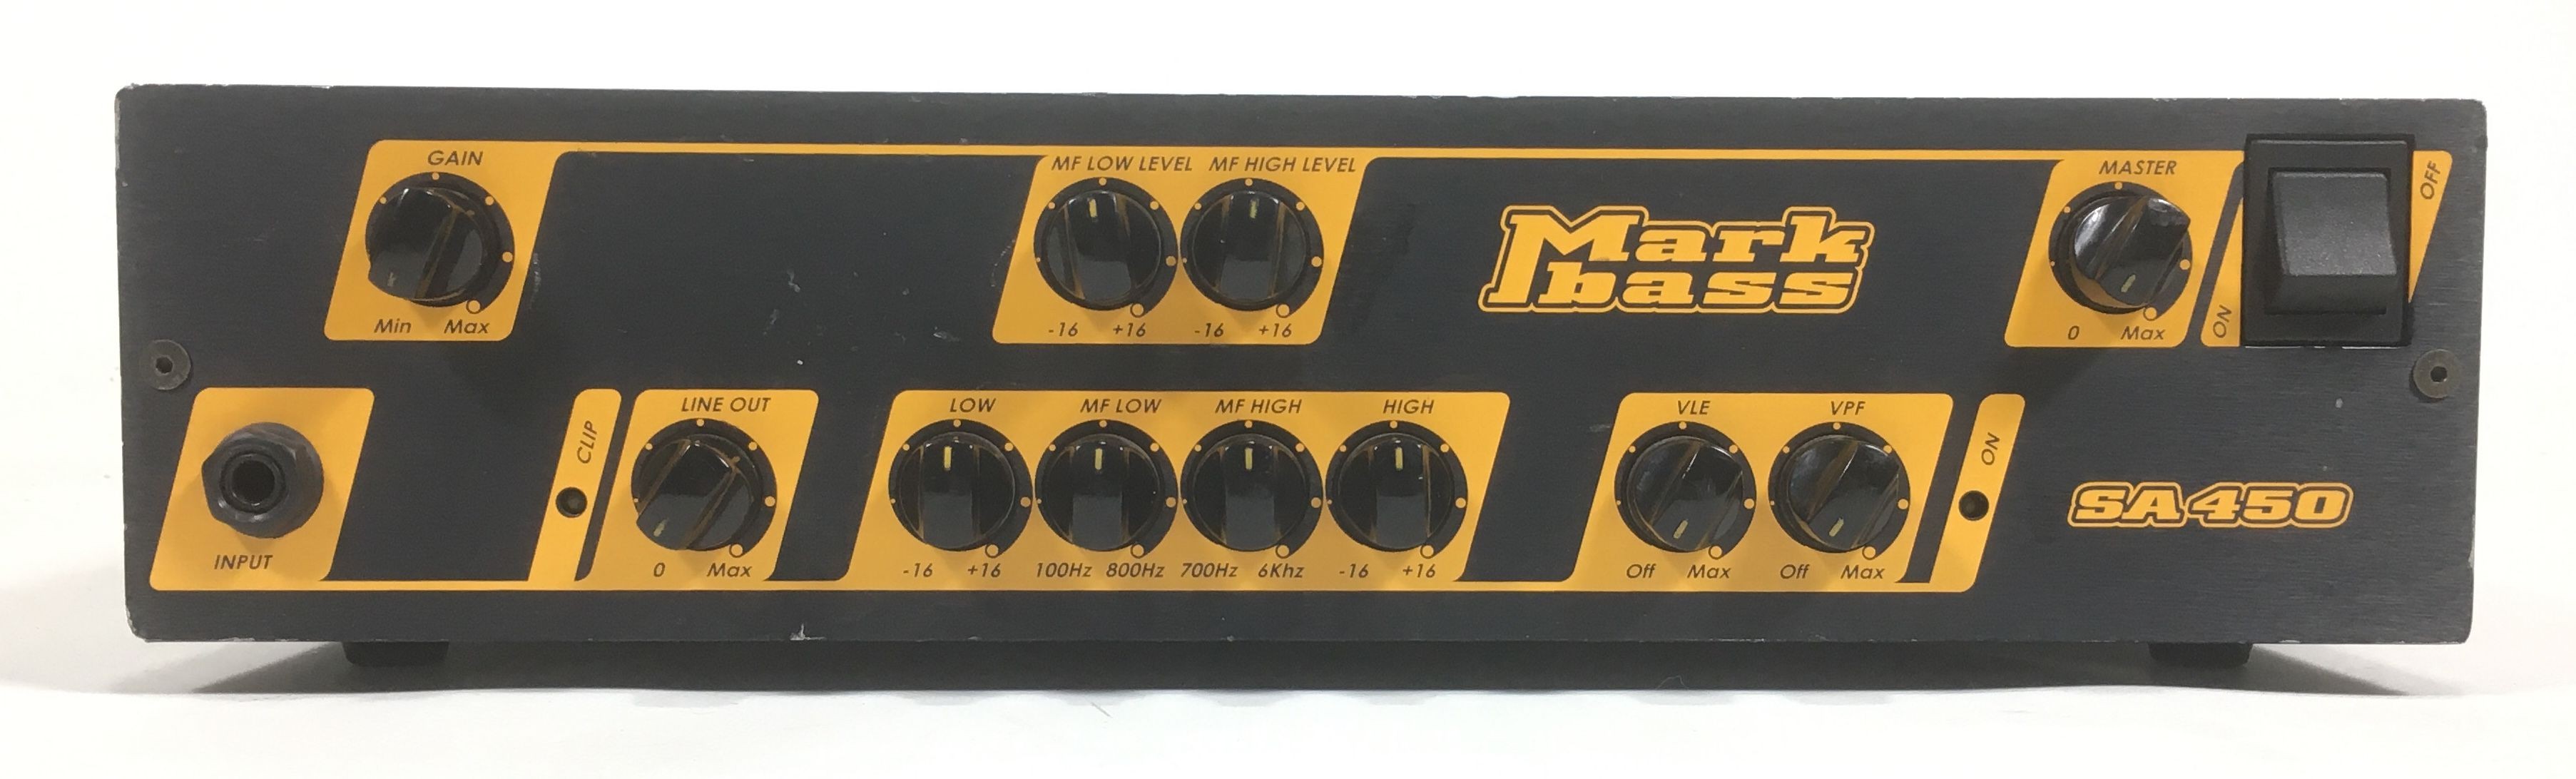 Markbass SA450 | Amplificatori Markbass